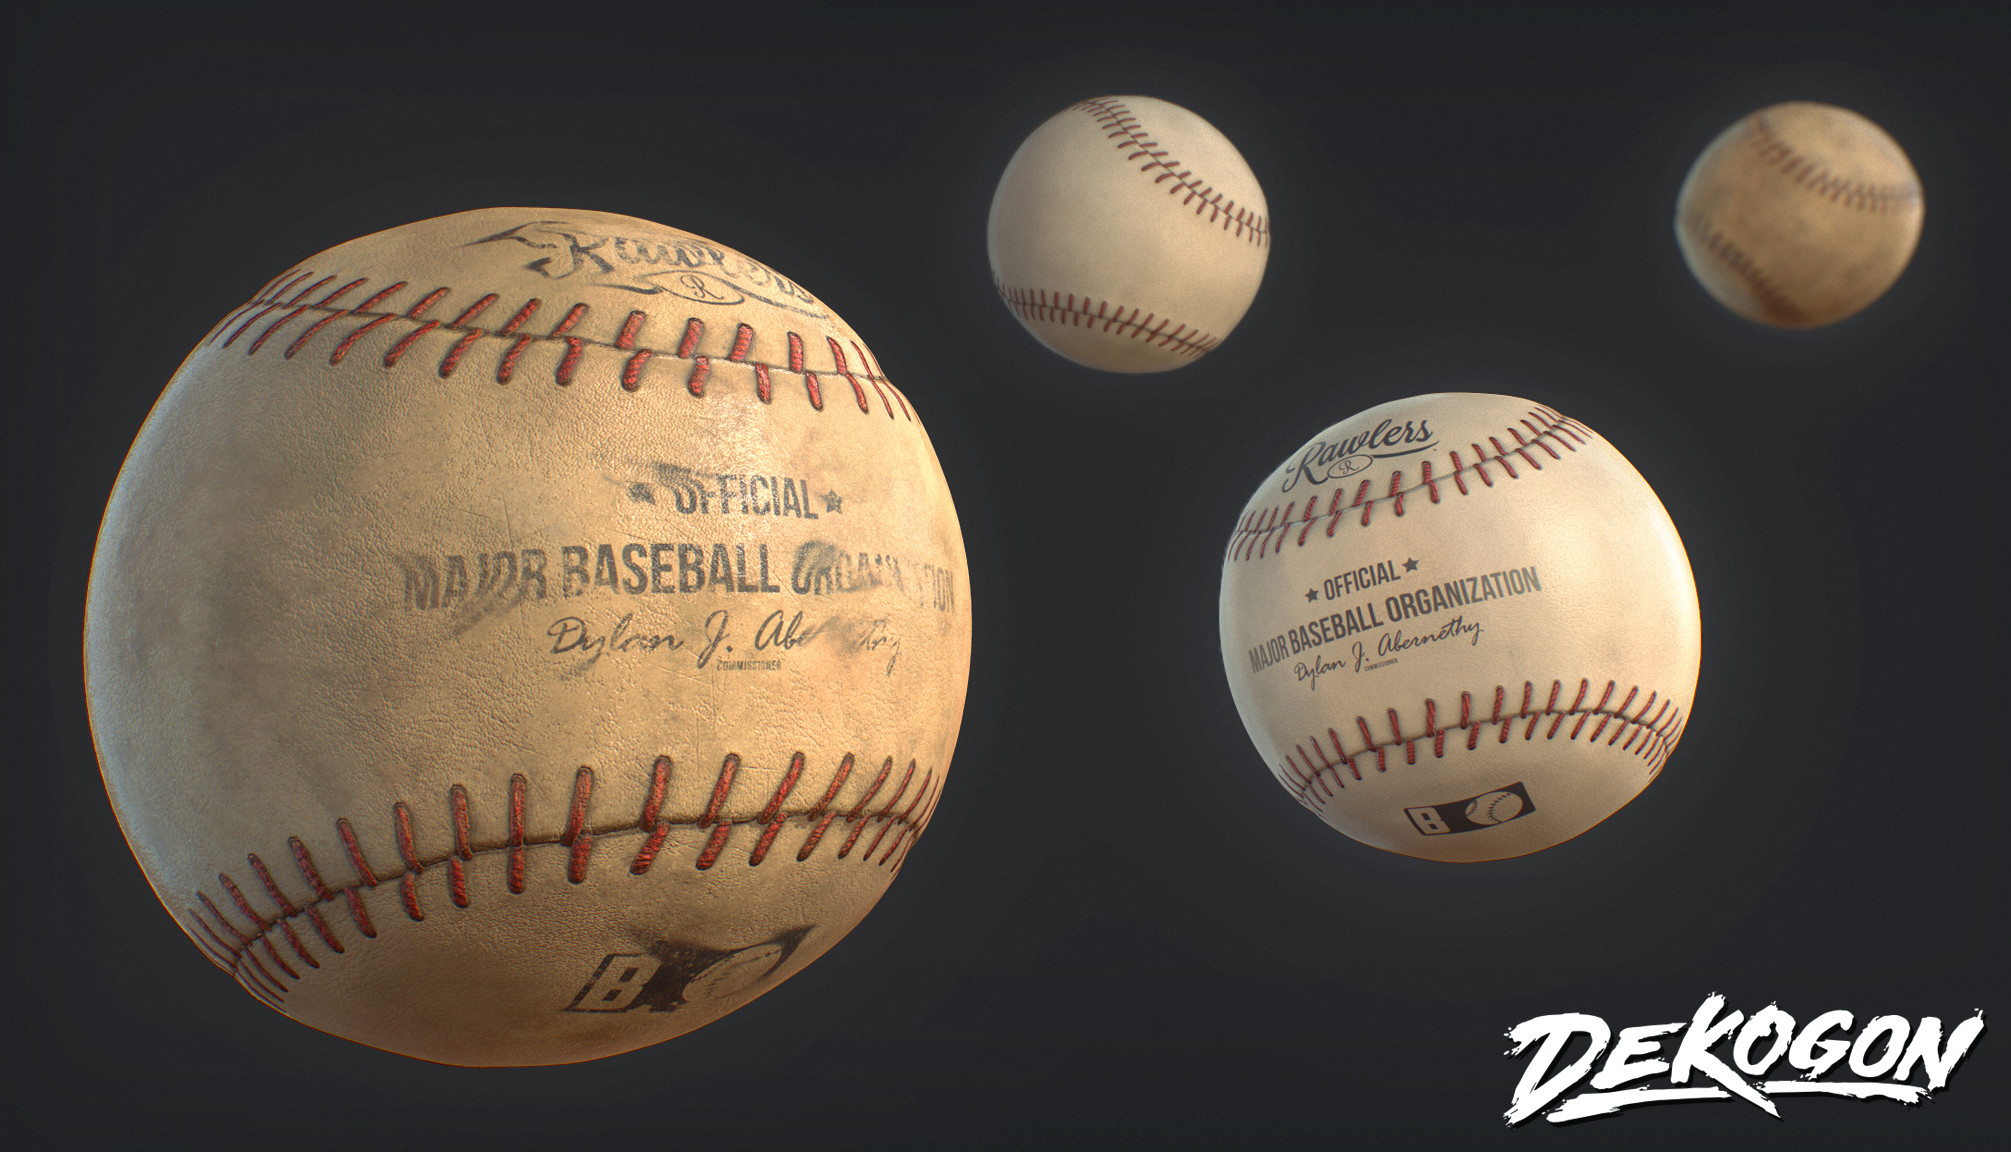 Dekogon - Baseball Asset